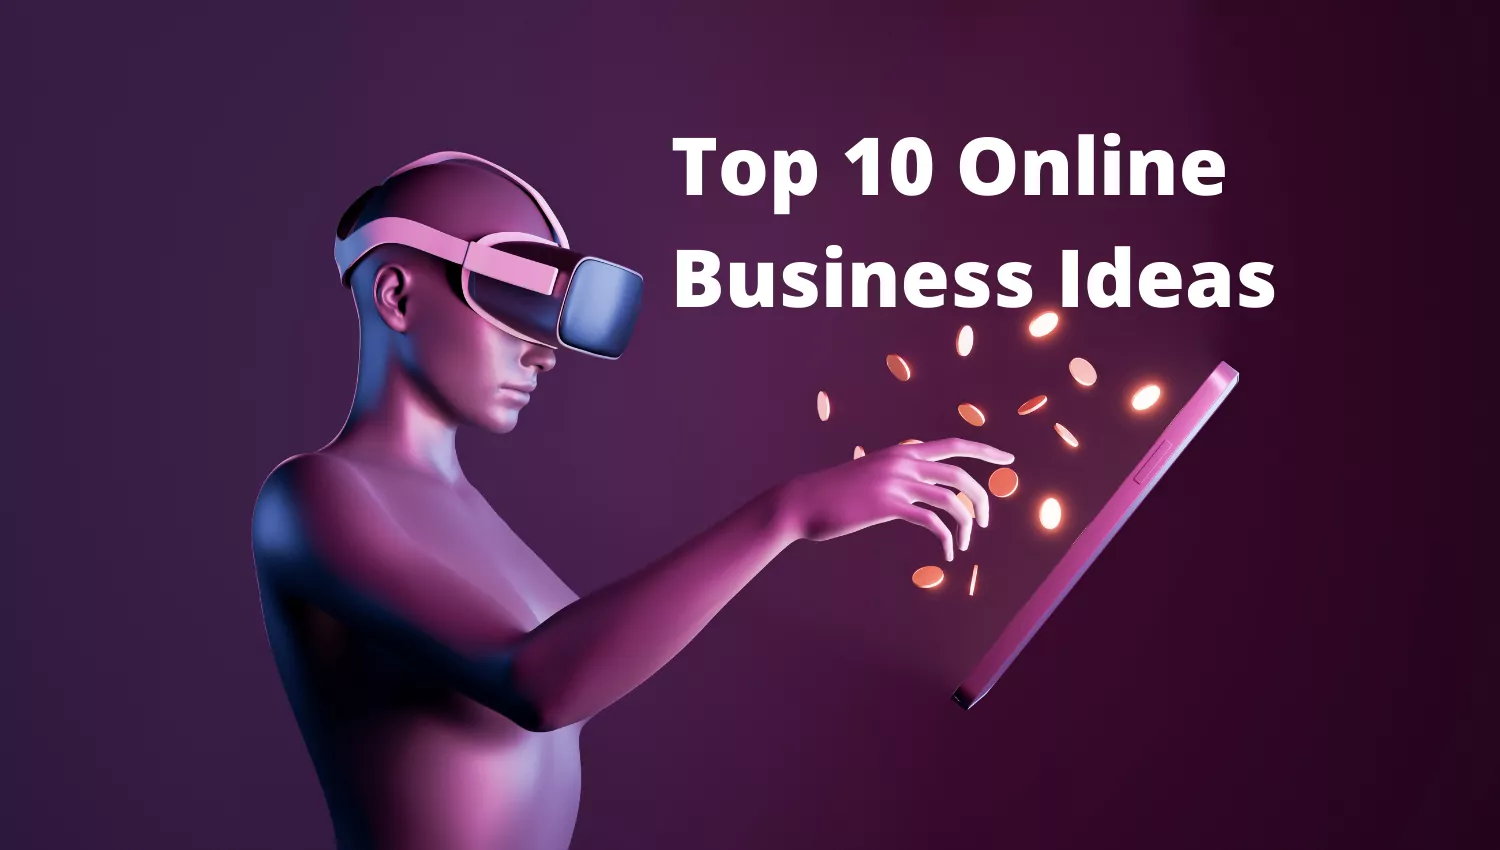 Online Business Ideas for Beginner Top 10 in 2022